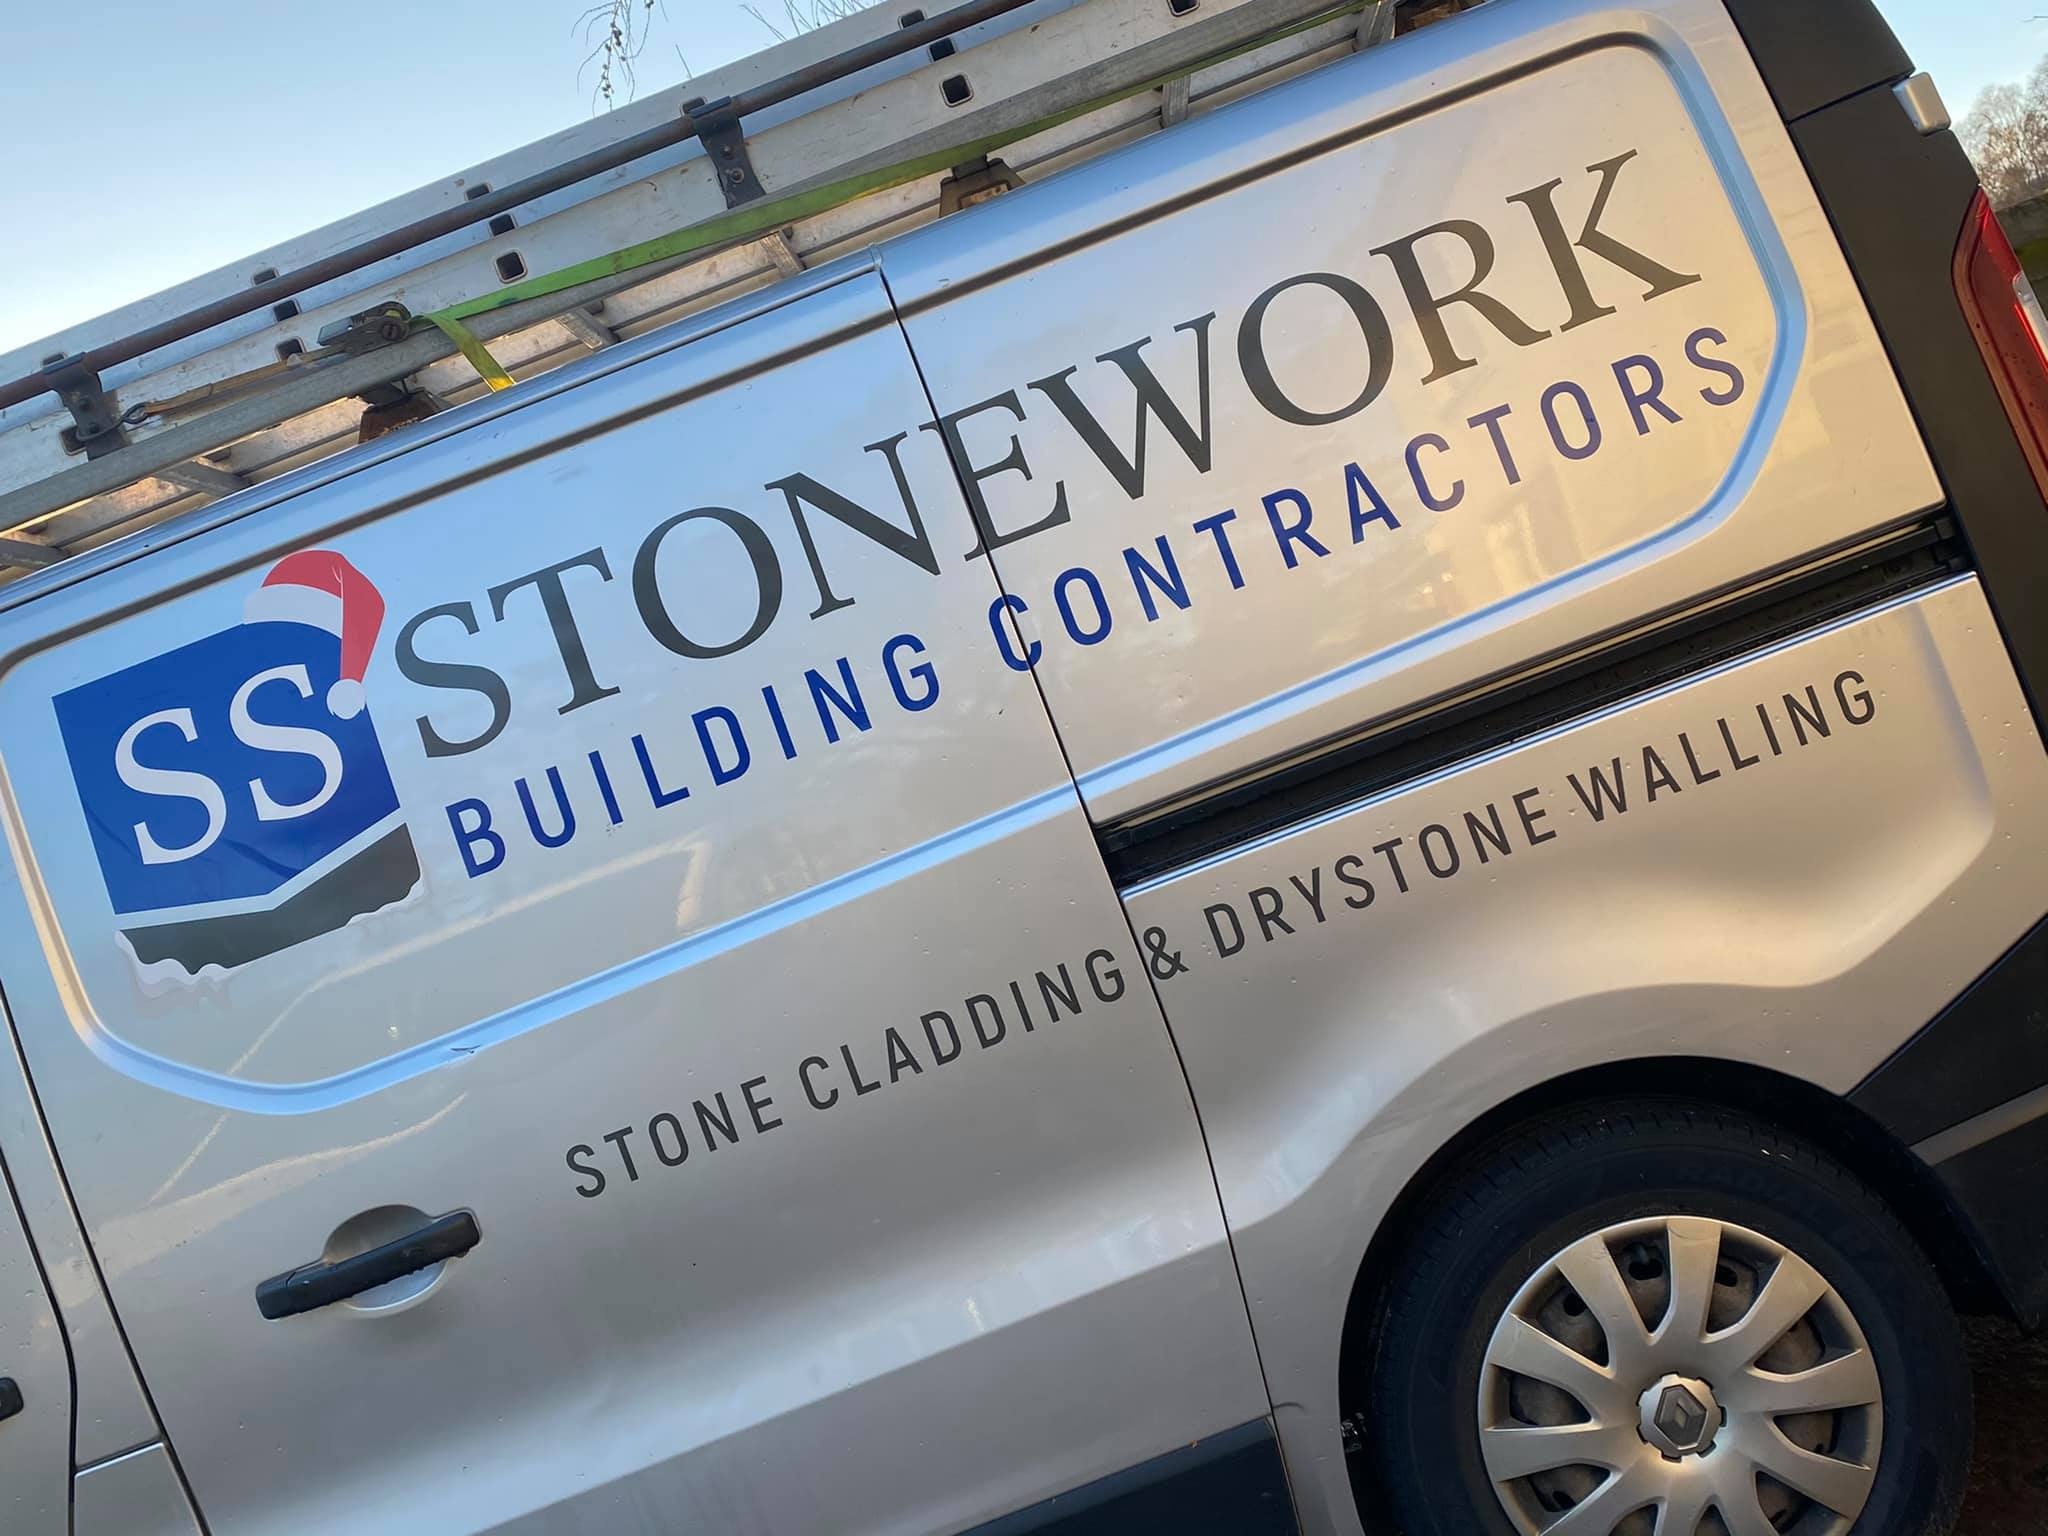 SS Stonework Building Contractors